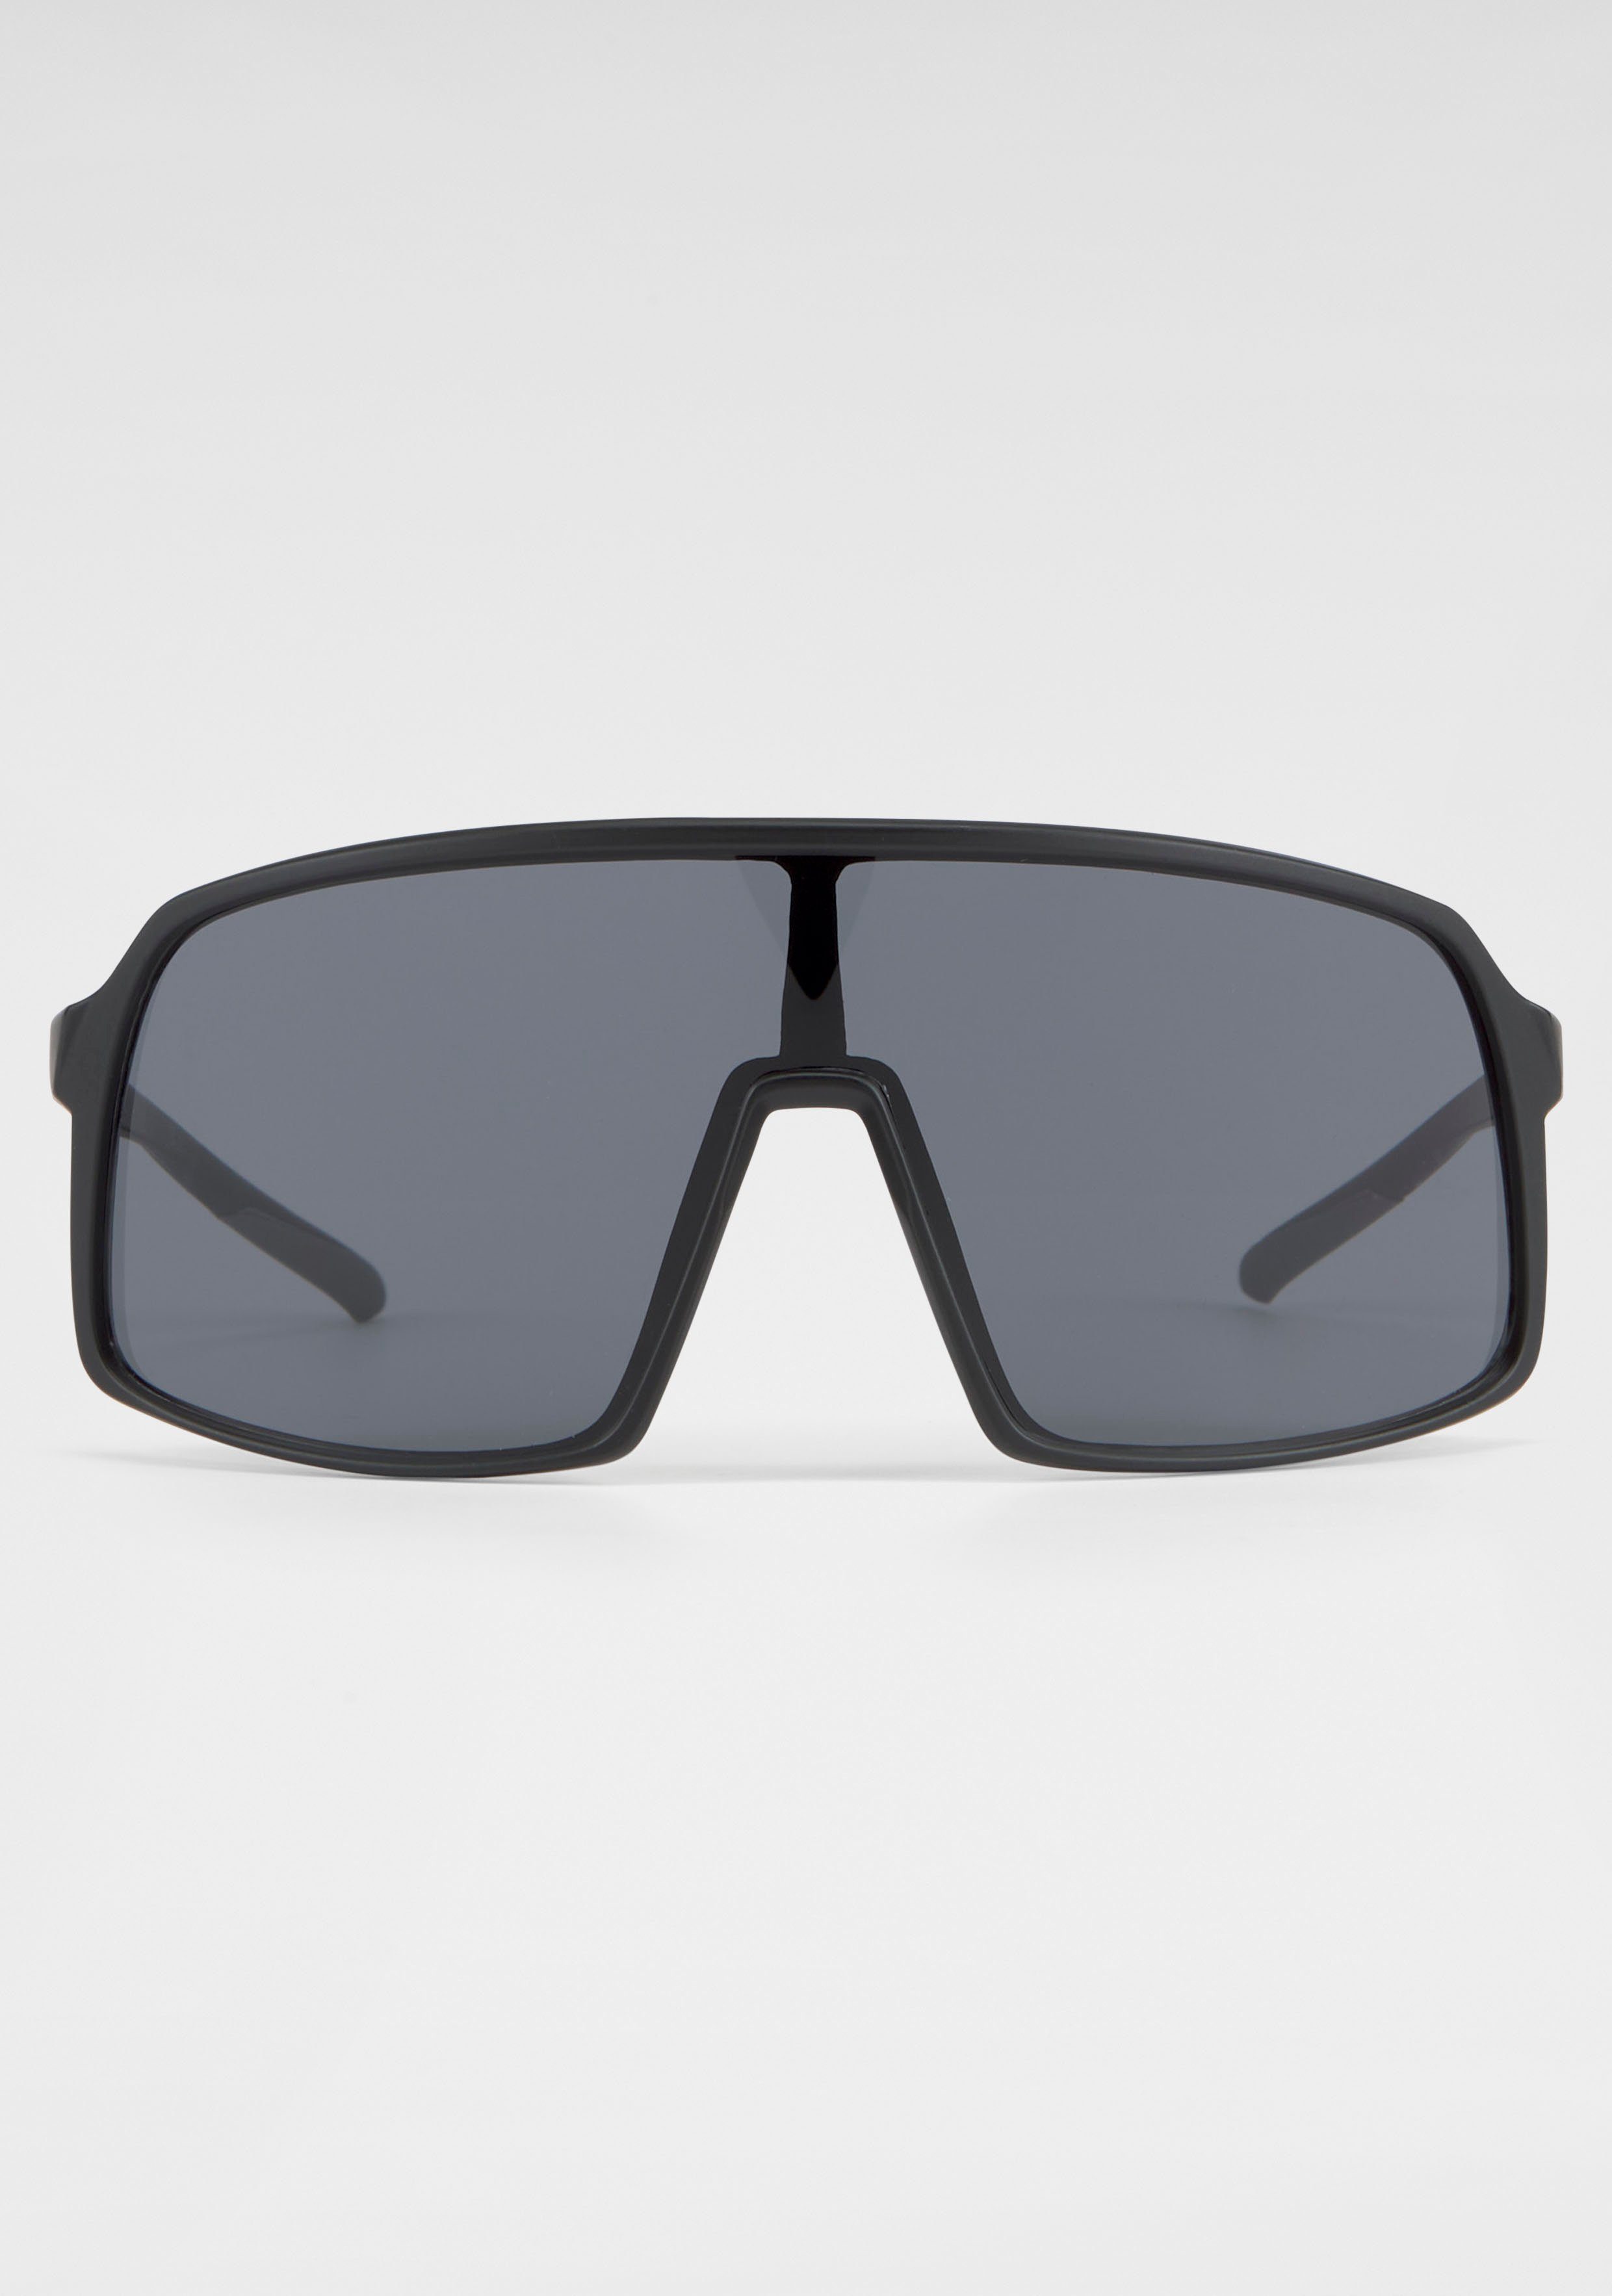 BACK IN BLACK Sonnenbrille schwarz Gläser große Eyewear